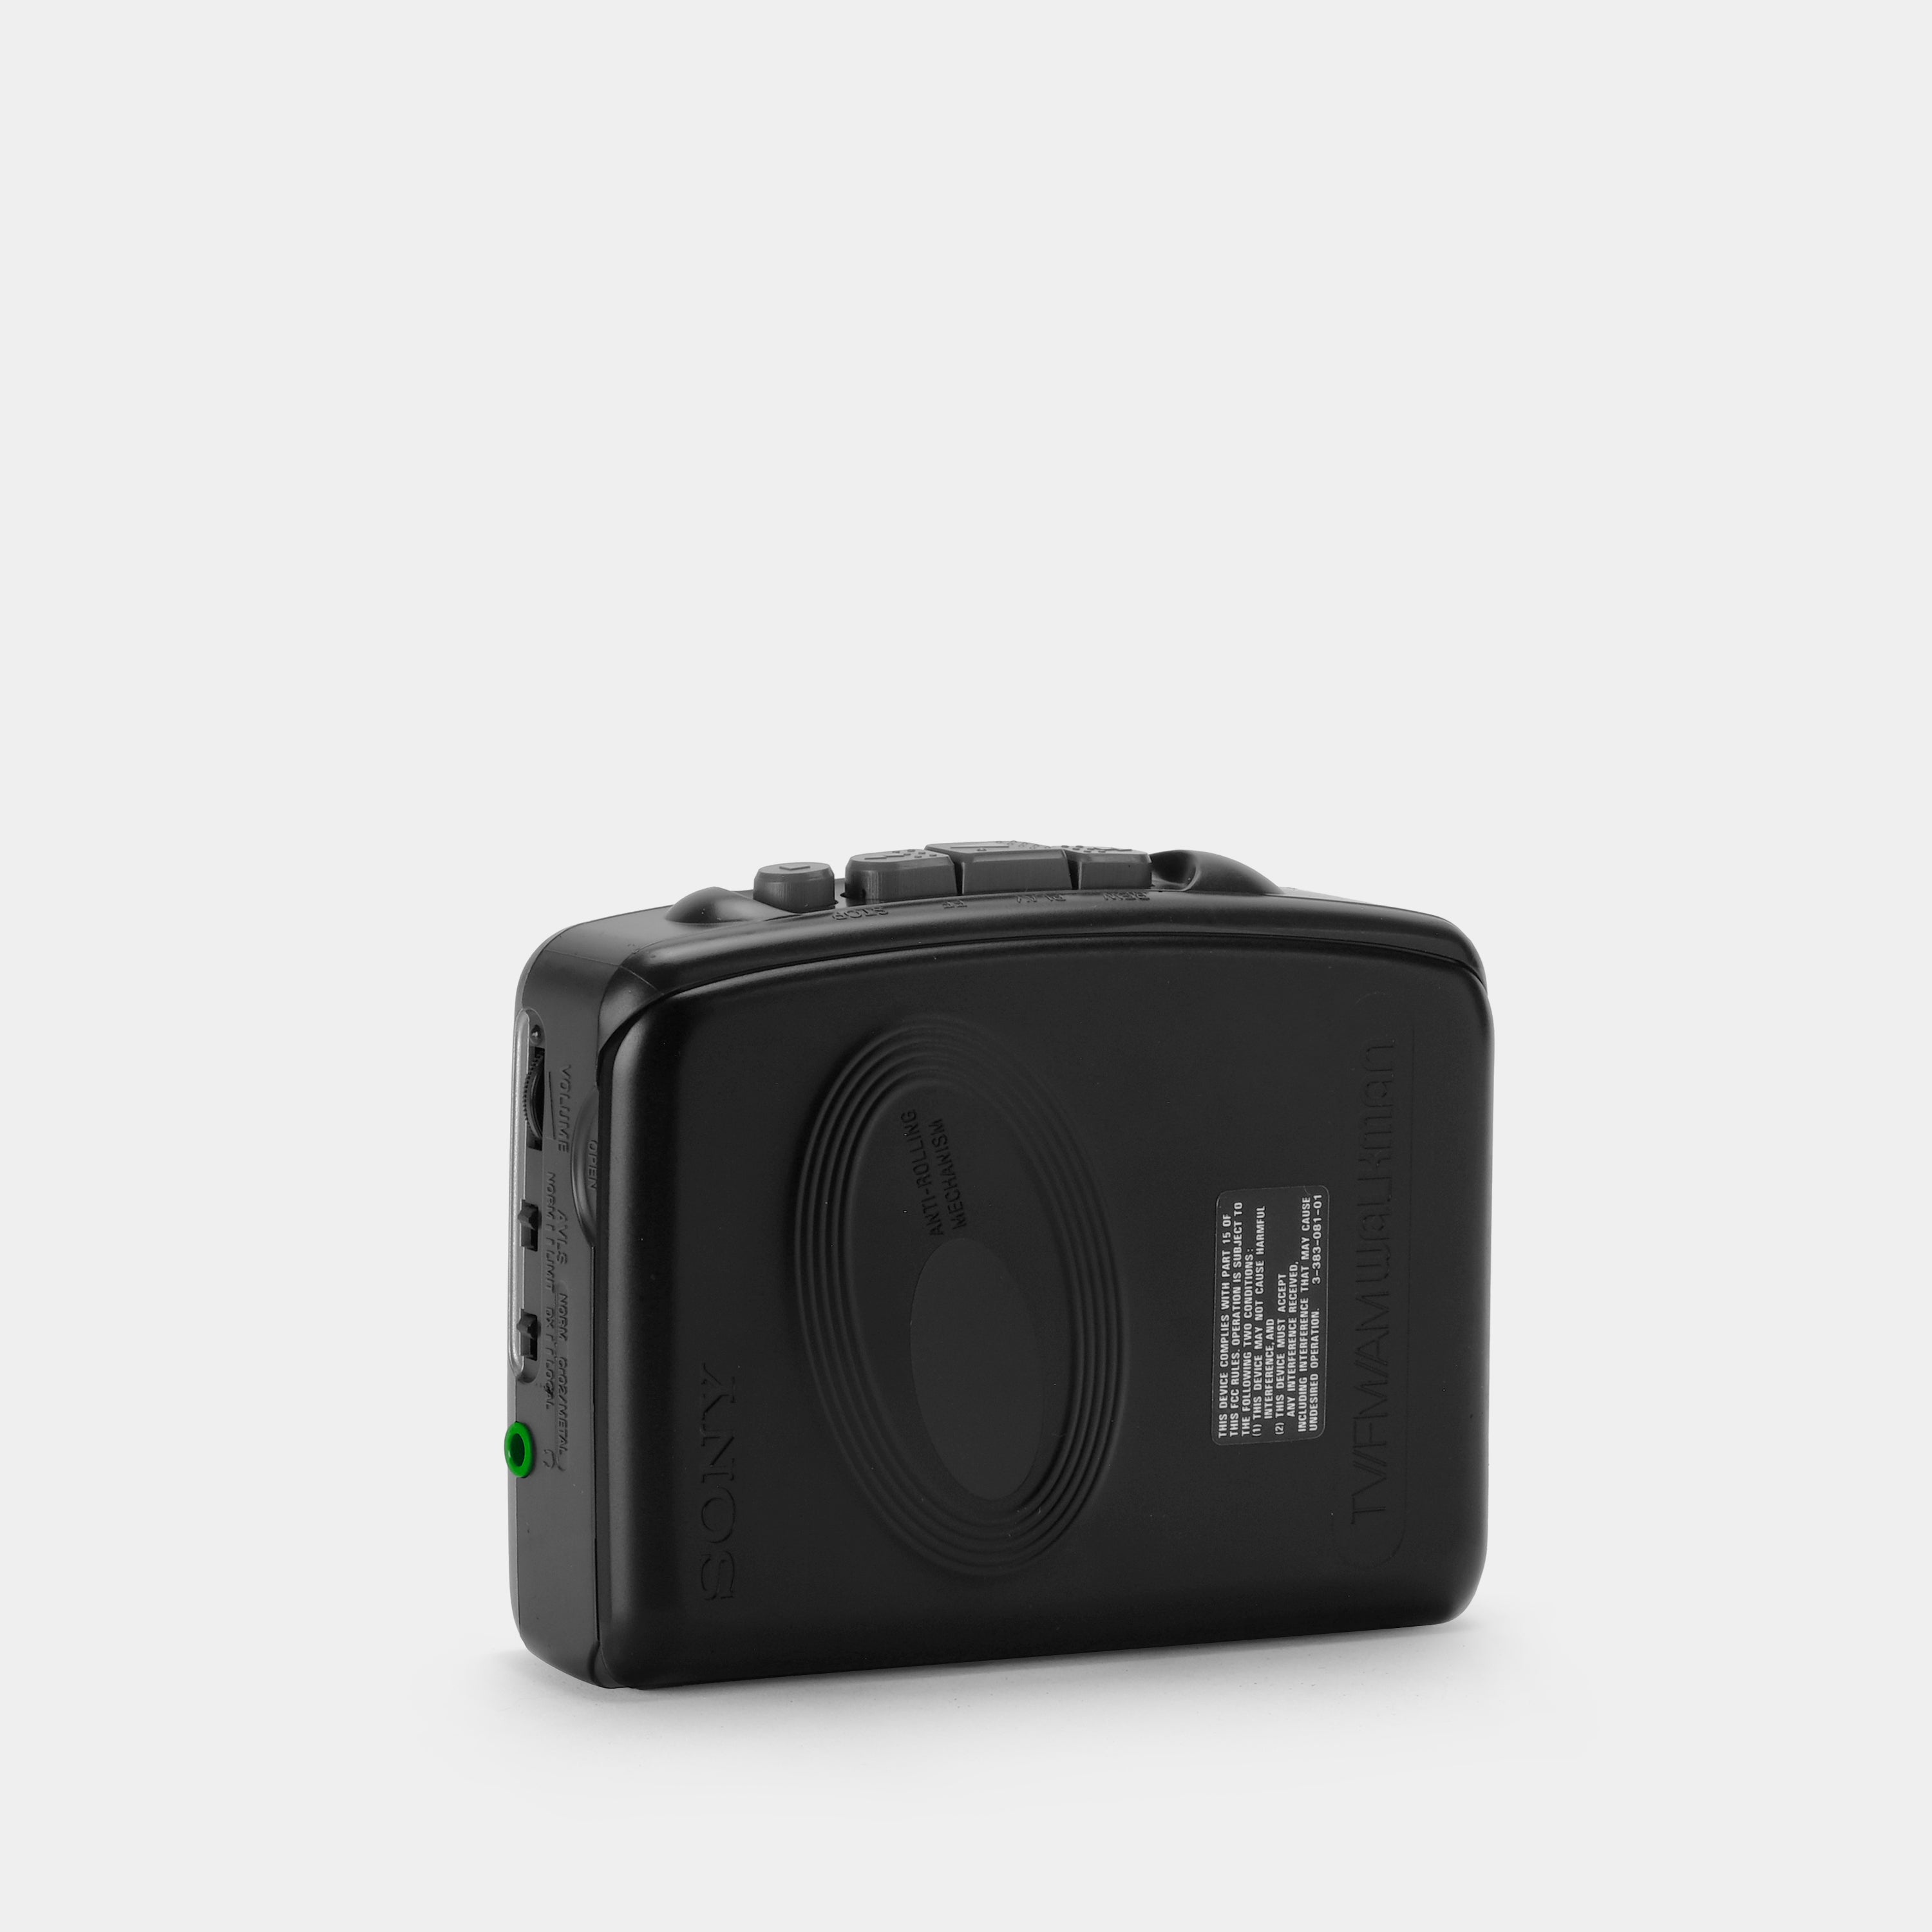 Sony Walkman WM-FX277 TV/AM/FM Portable Cassette Player with Case